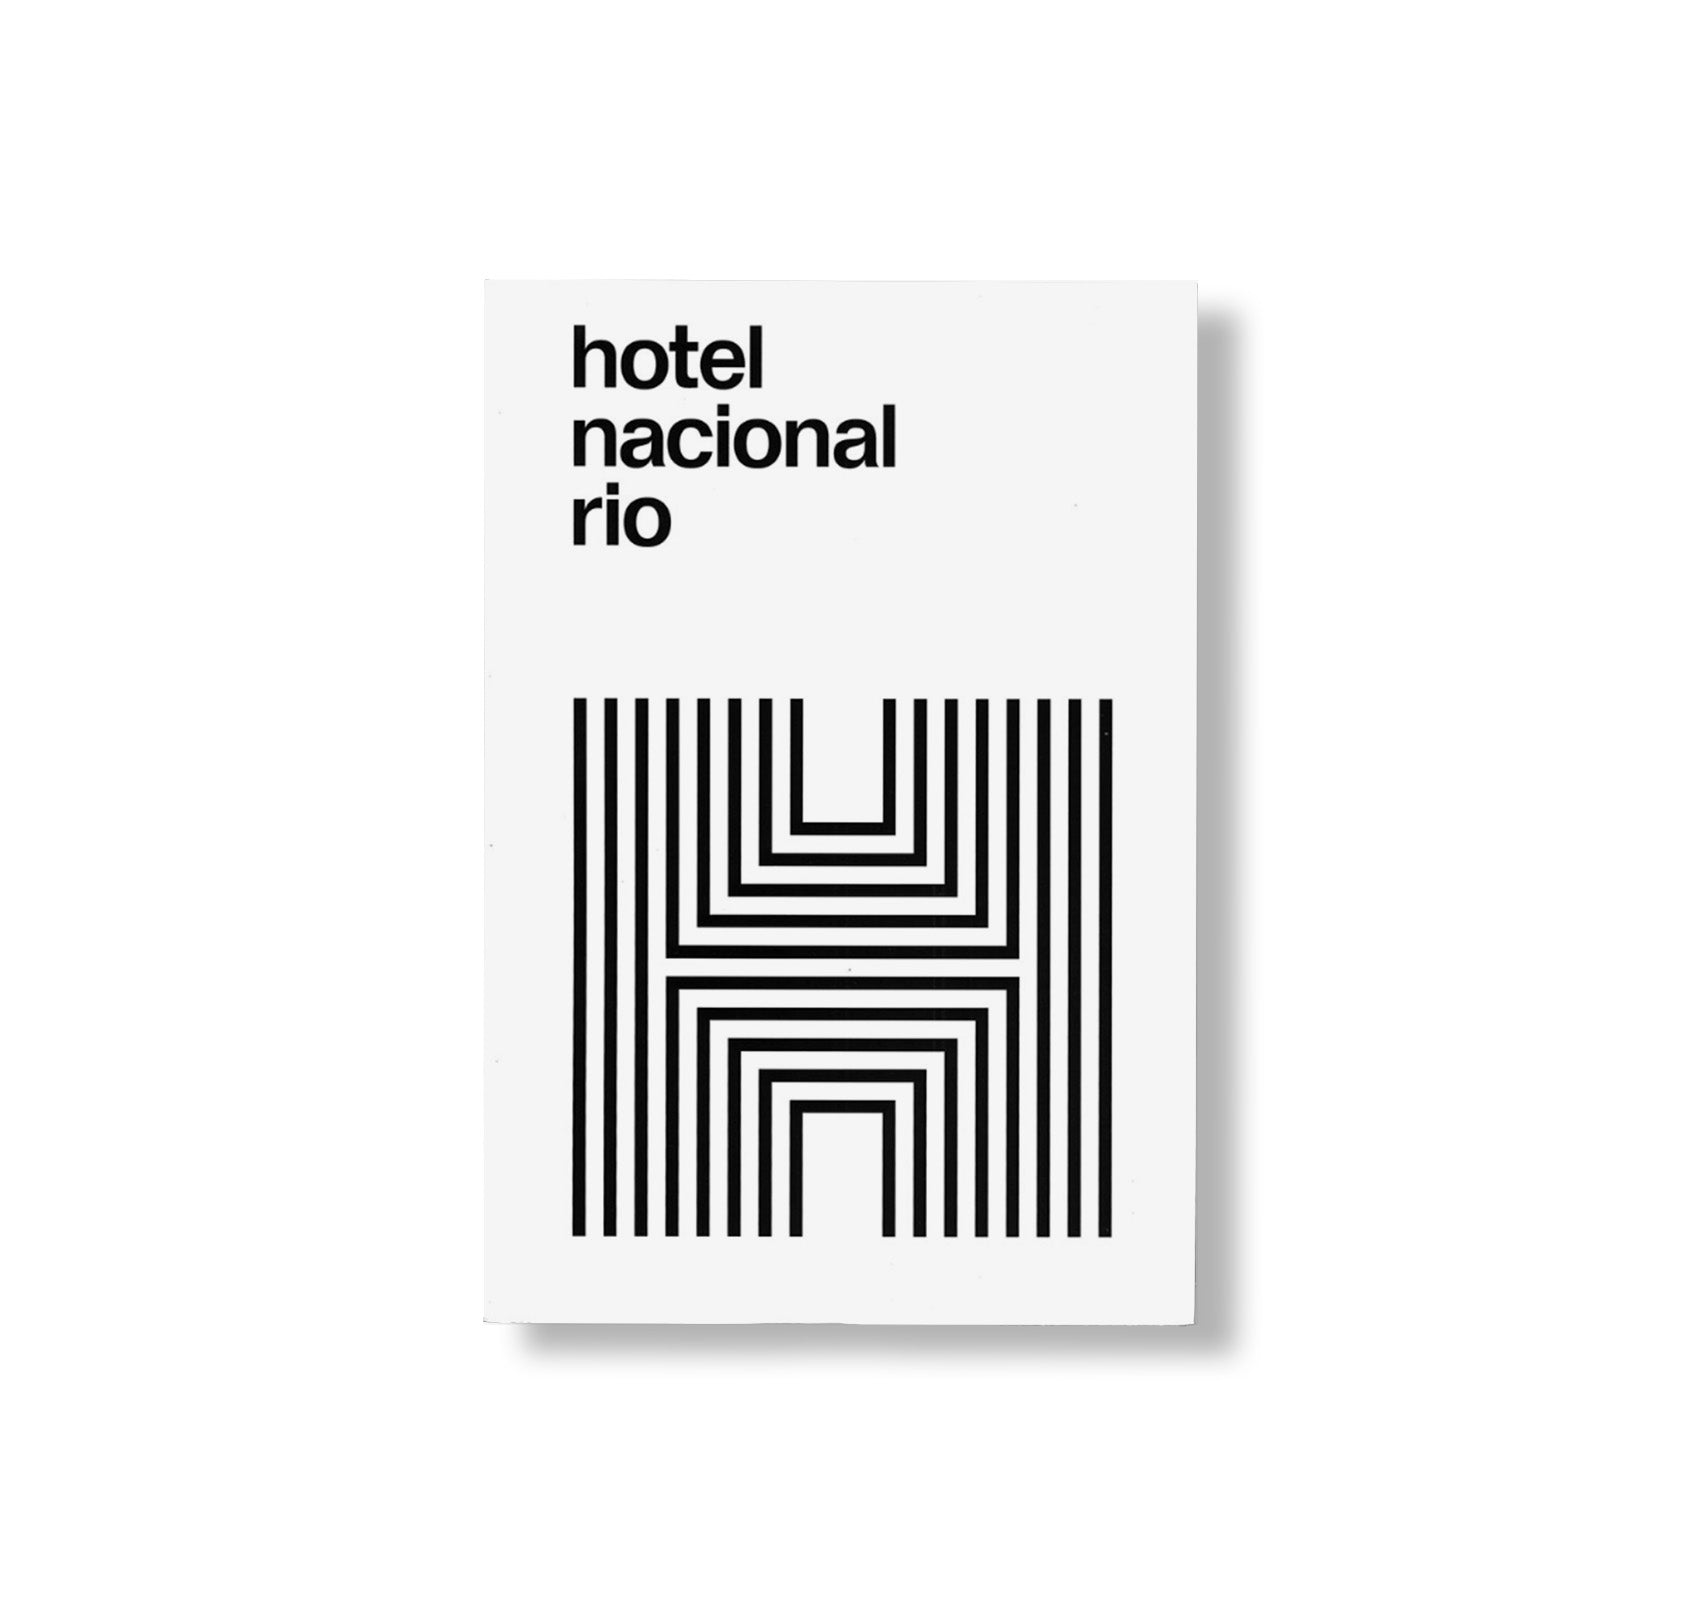 HOTEL NACIONAL RIO by Olaf Nicolai